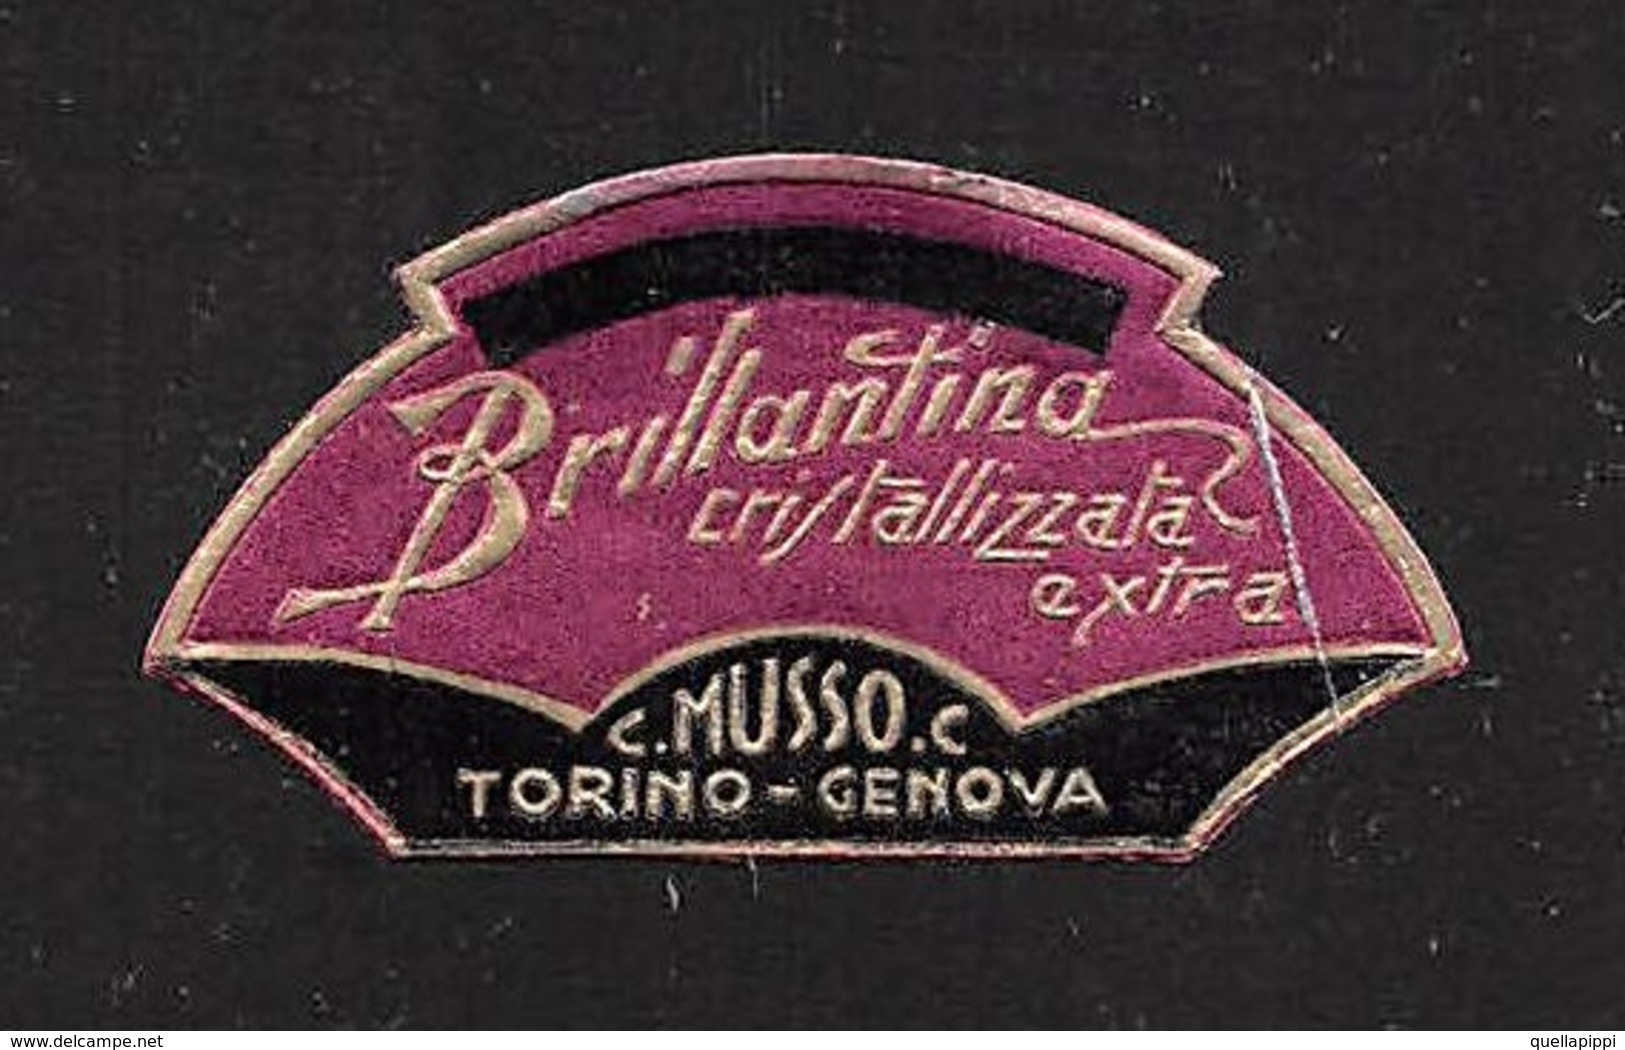 07667 "BRILLANTINA CRISTALLIZZATA EXTRA - C. MUSSO C. - TORINO-GENOVA - 1920 CIRCA" ETICHETTA  ORIGINALE - Etiquetas